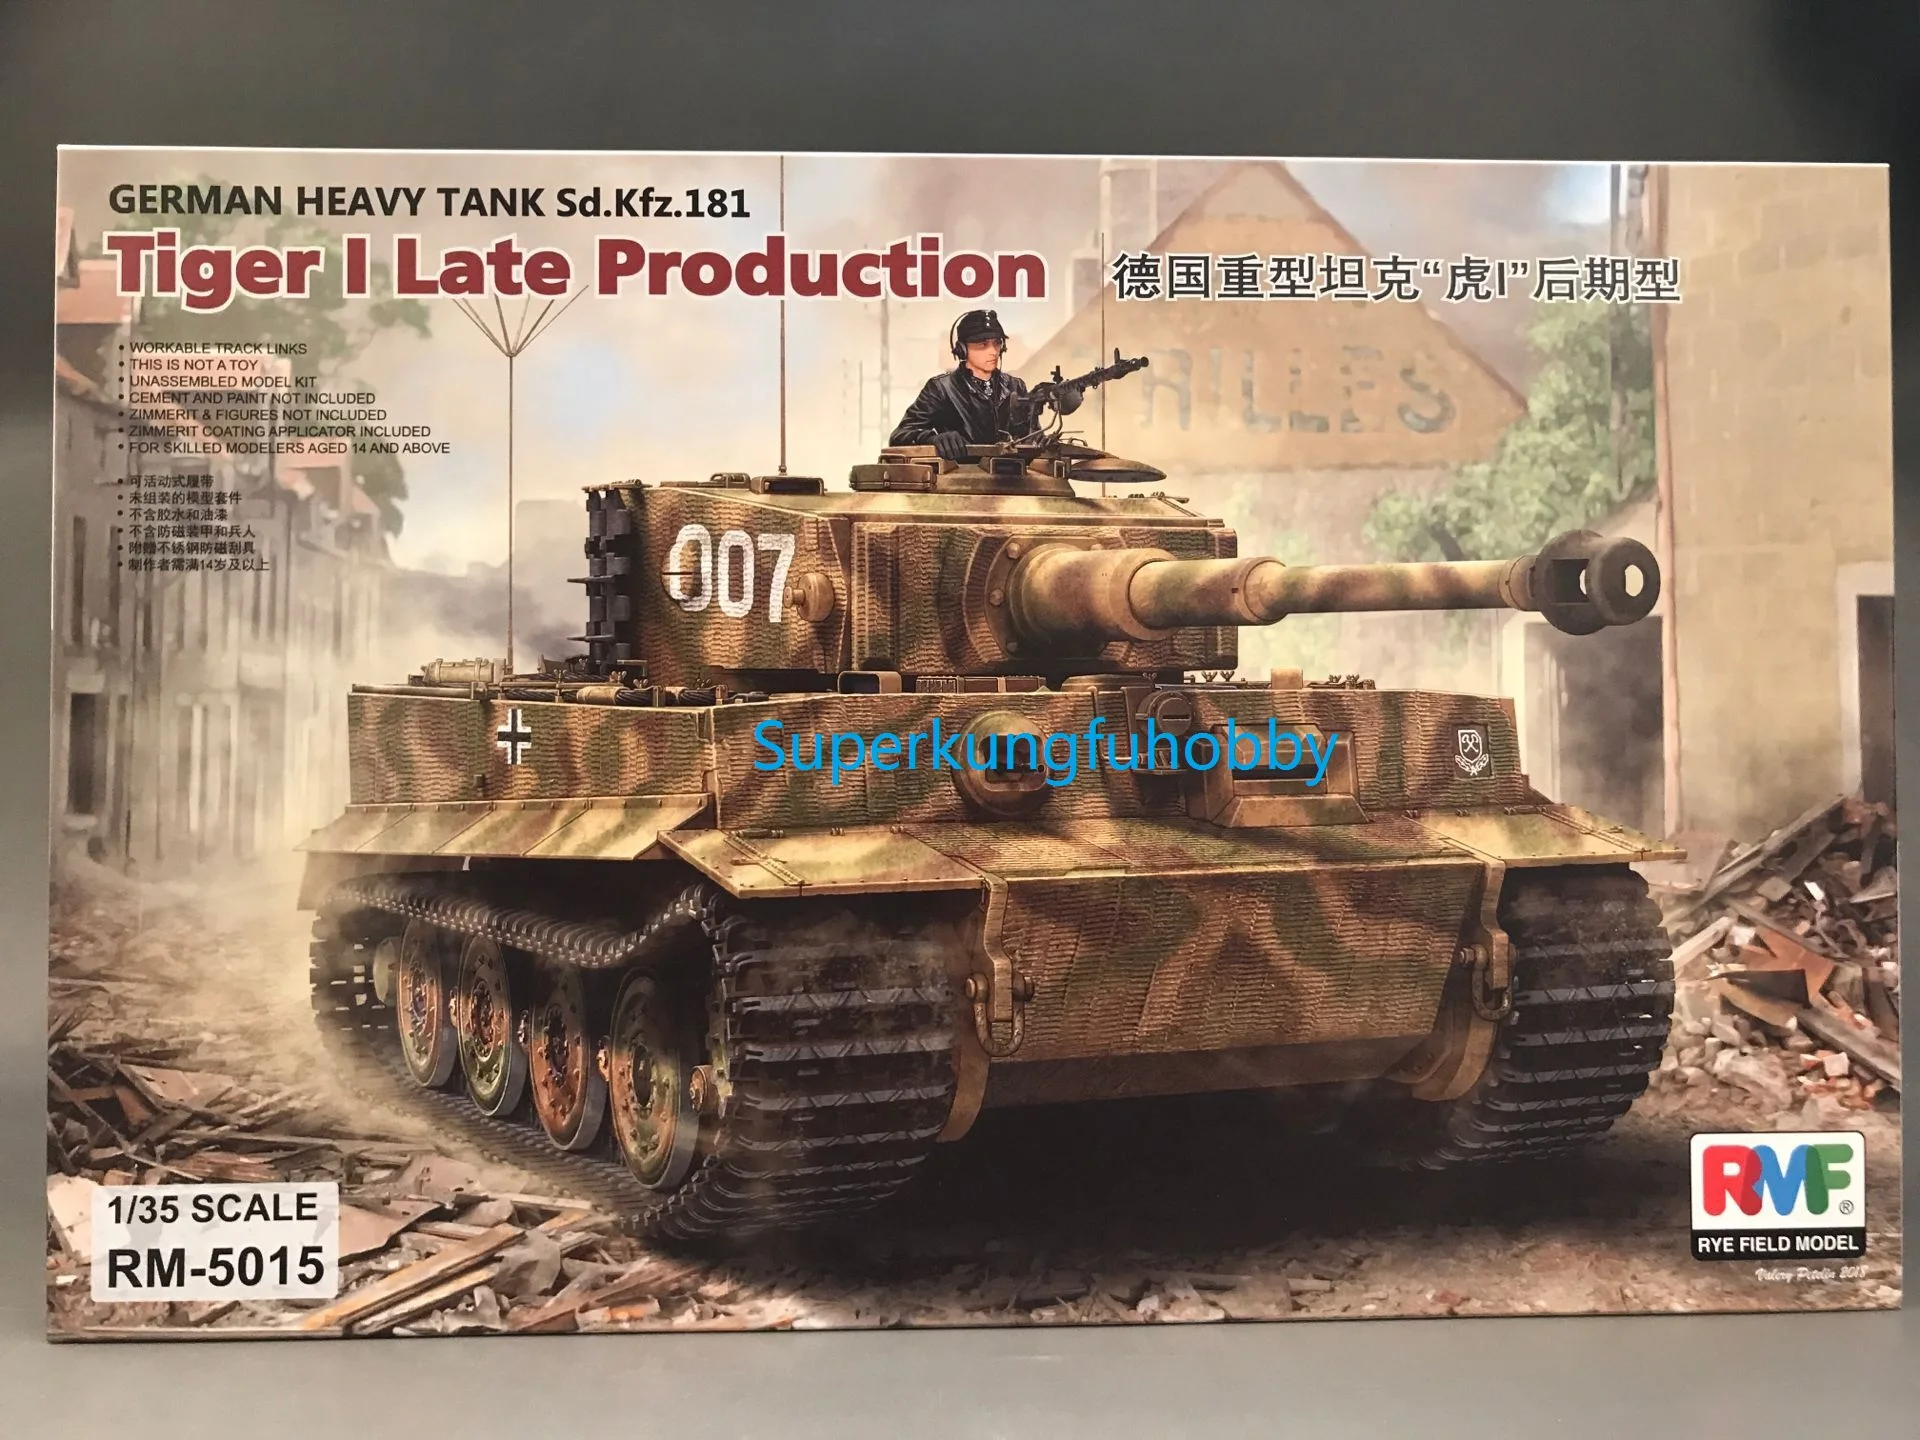 

Ryefield-Model RM-5015 1/35 Pz.Kpfw.VI Ausf.E Sd.Kfz.181 Tiger I Late Production